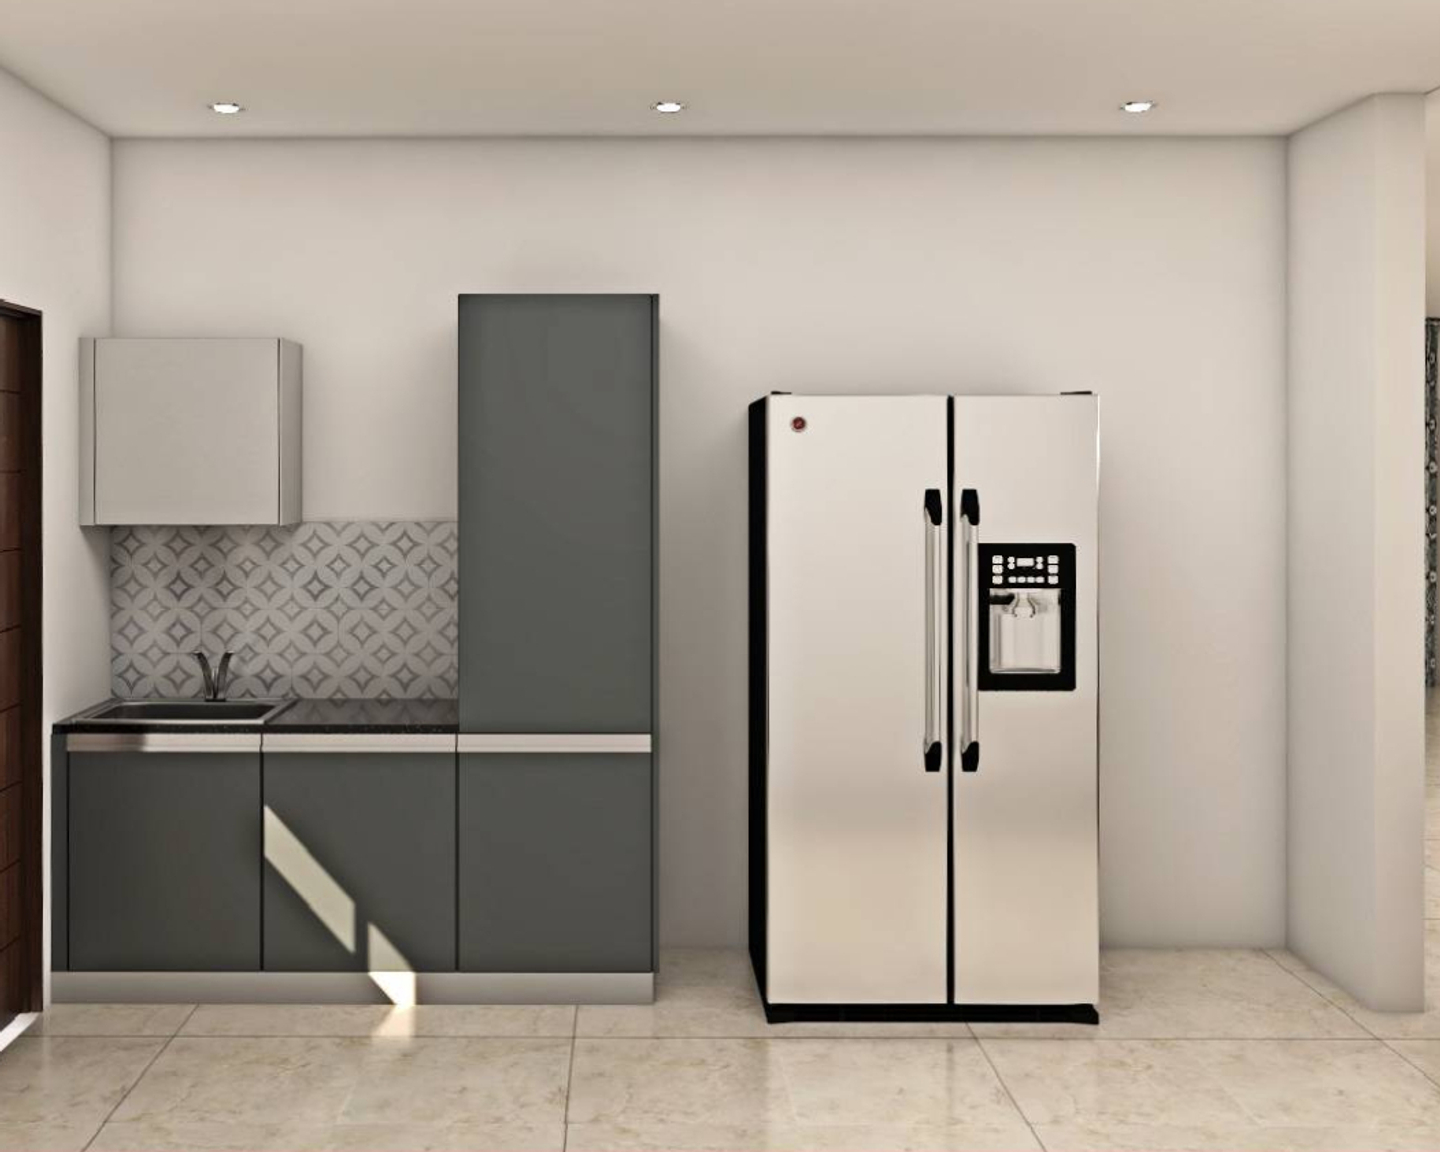 Modern Spacious Kitchen Design For Rental Homes - Livspace